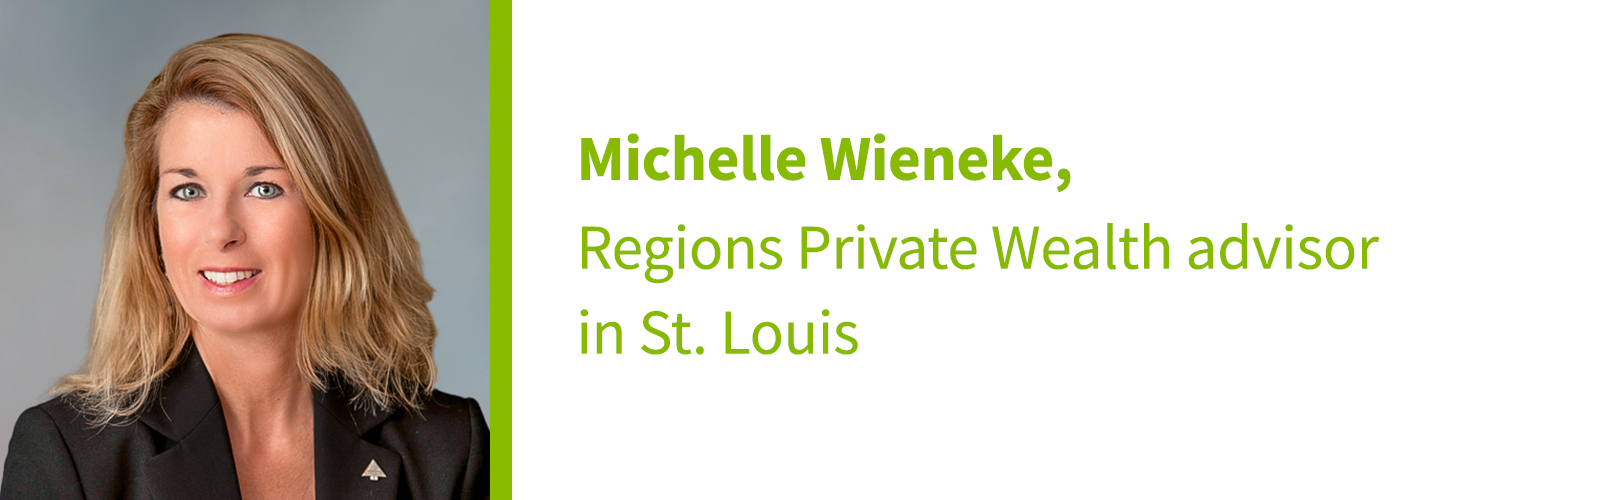 "Michelle Wieneke, Regions Private Wealth advisor in St. Louis" Photo of Michelle